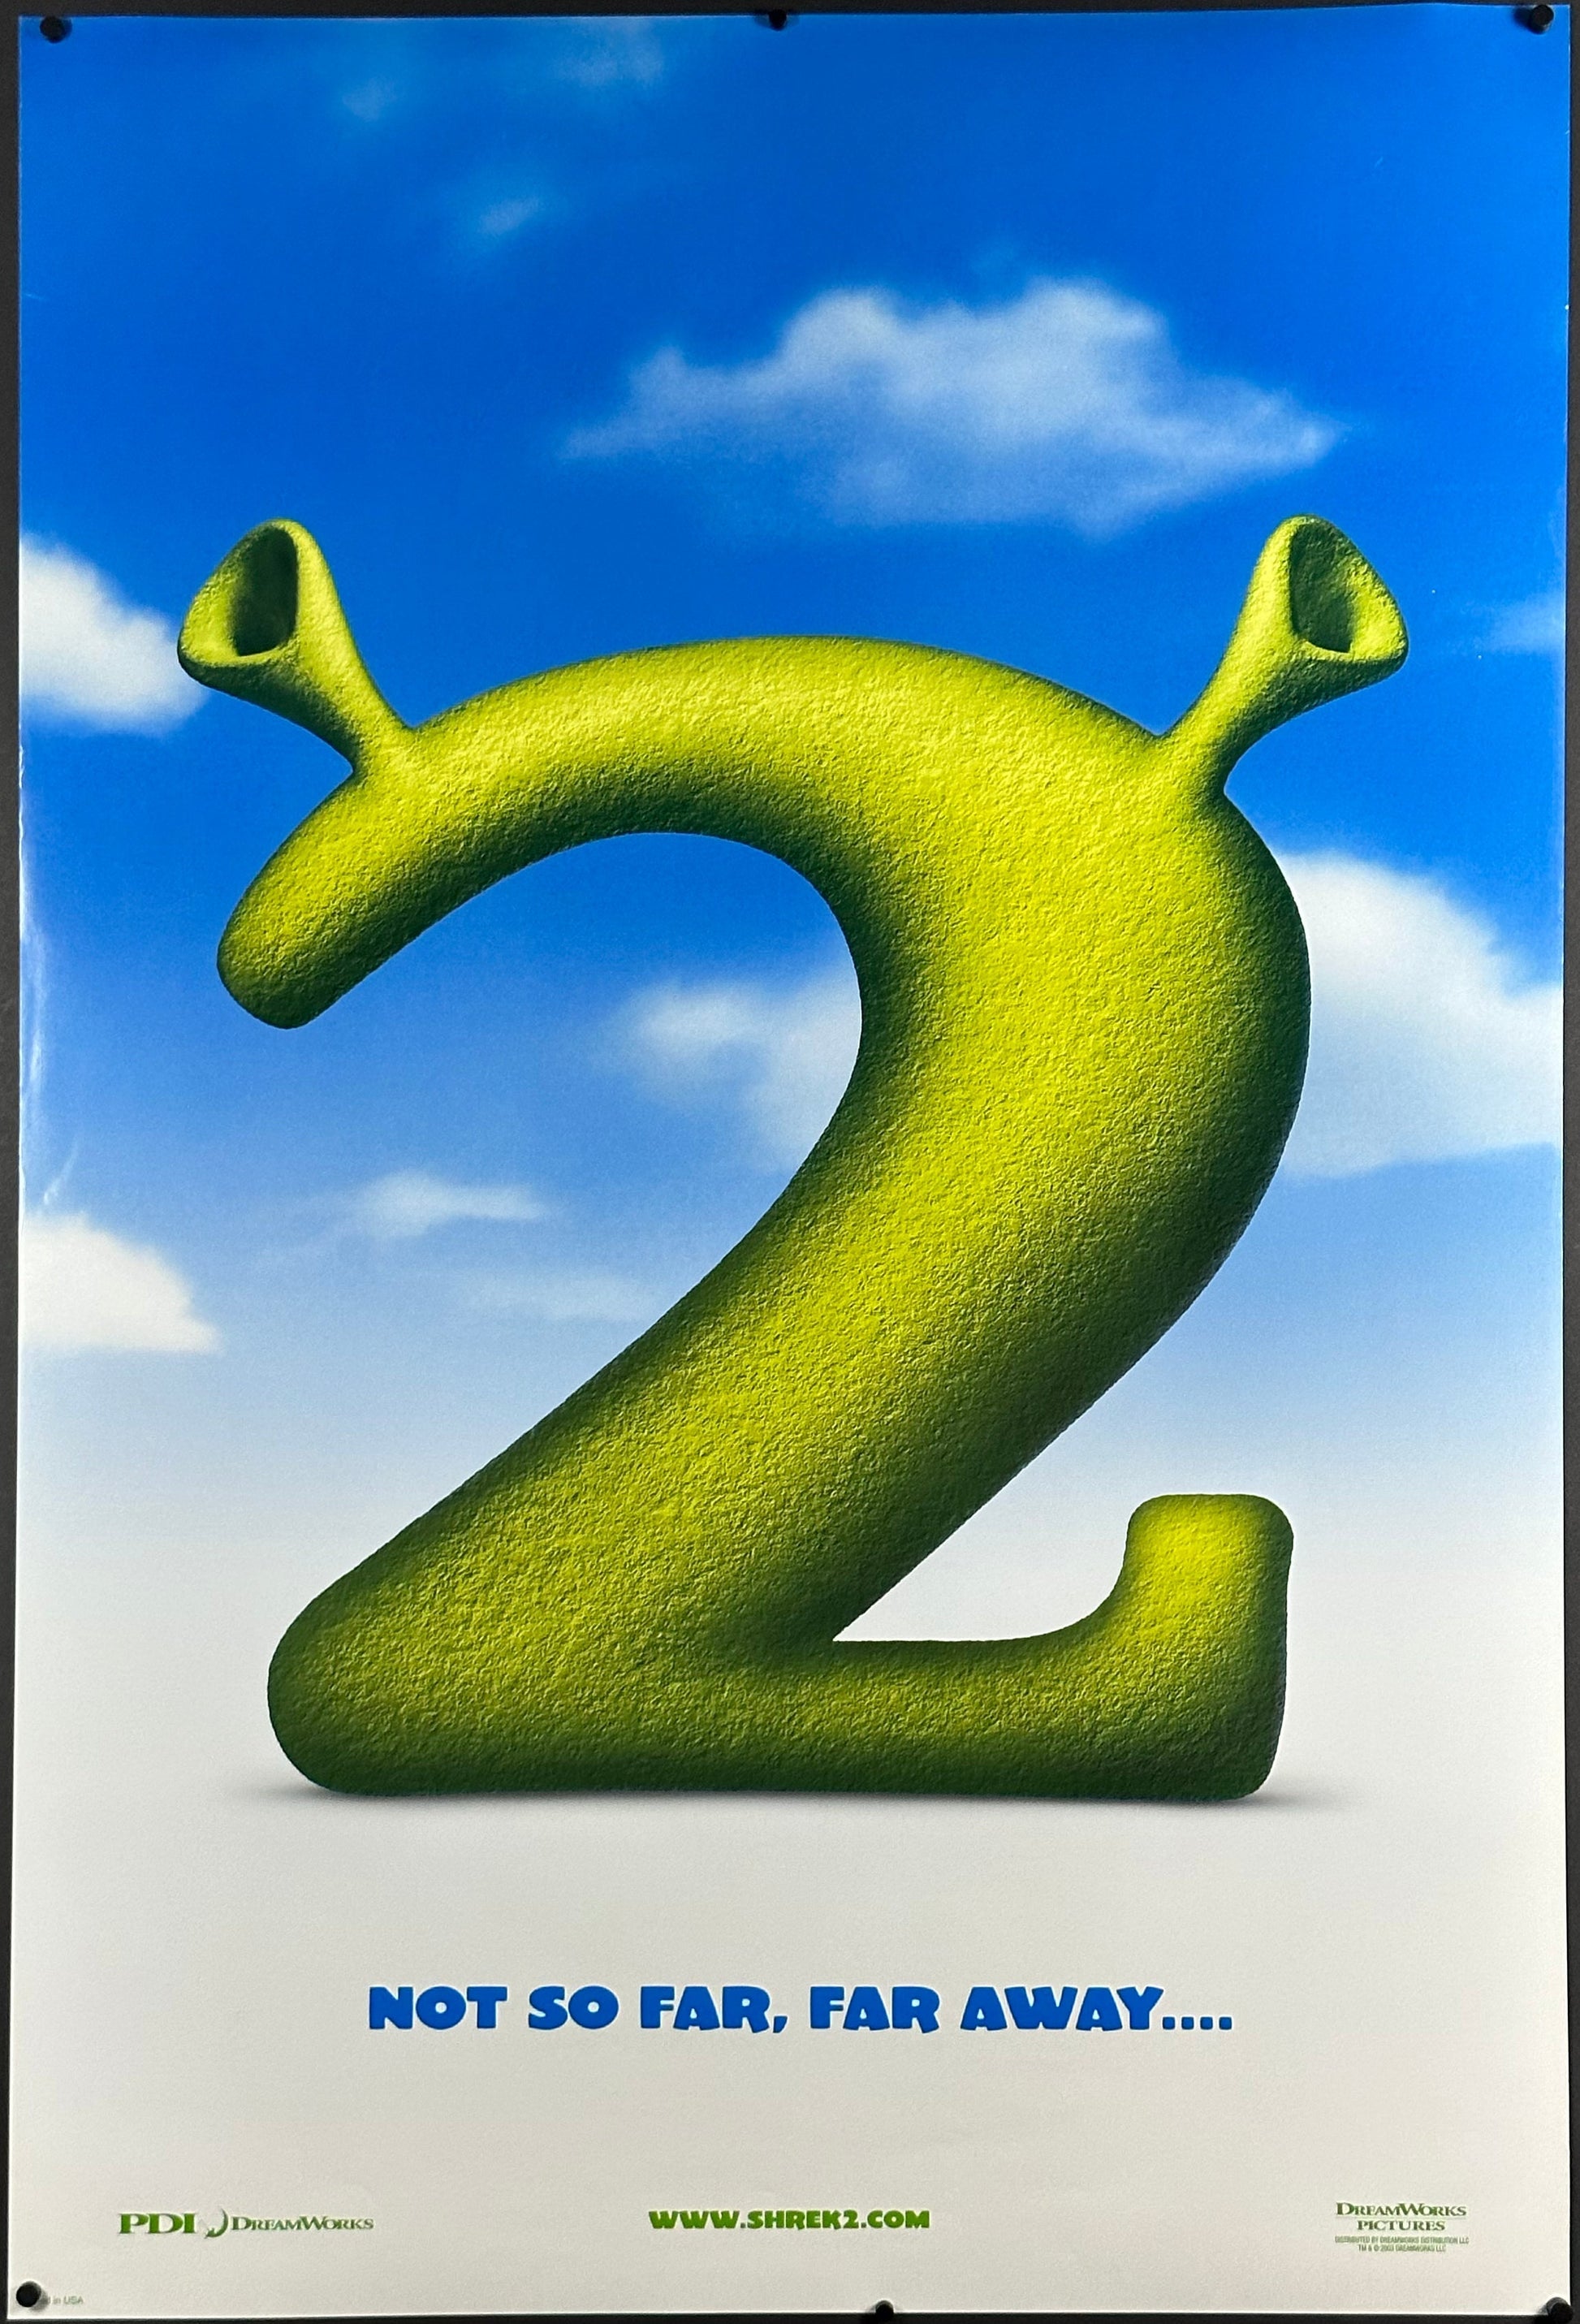 Shrek 2 US One Sheet Teaser Style (2004) - ORIGINAL RELEASE - posterpalace.com